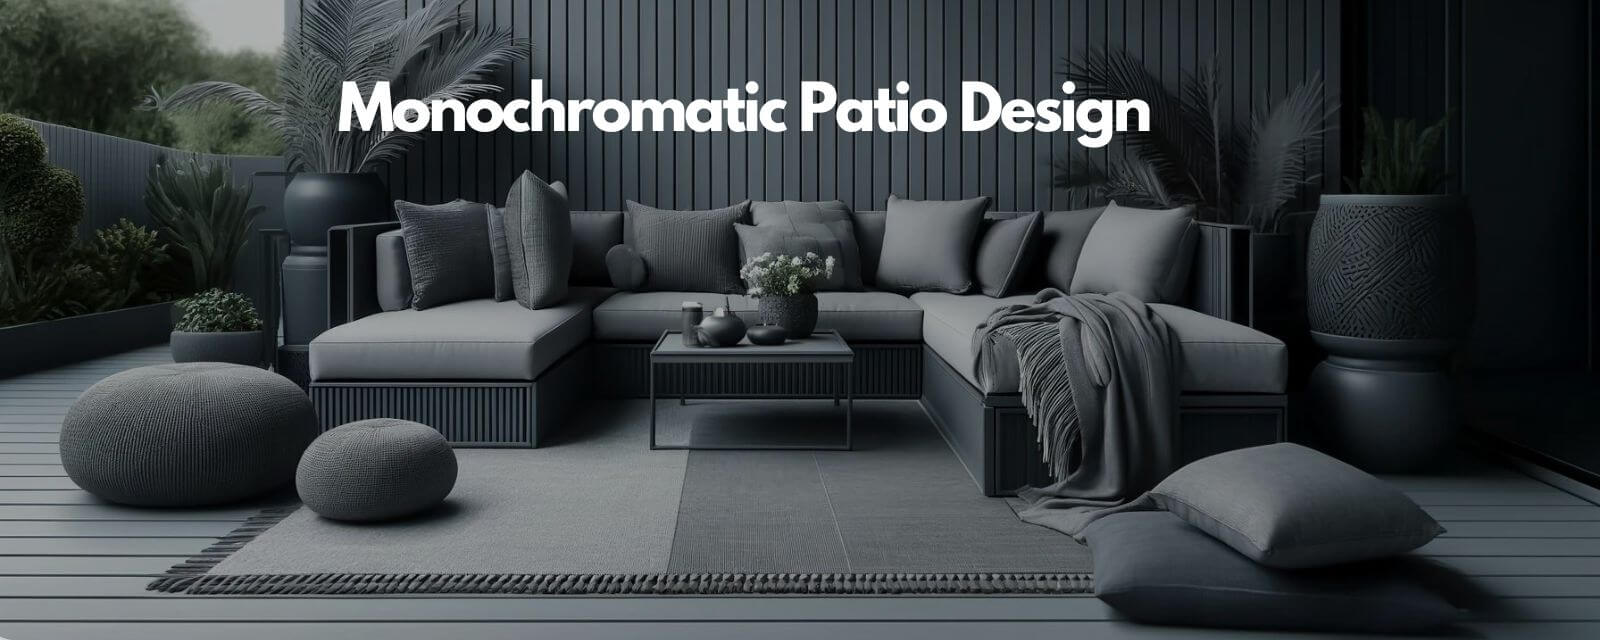 Monochromatic Patio Design